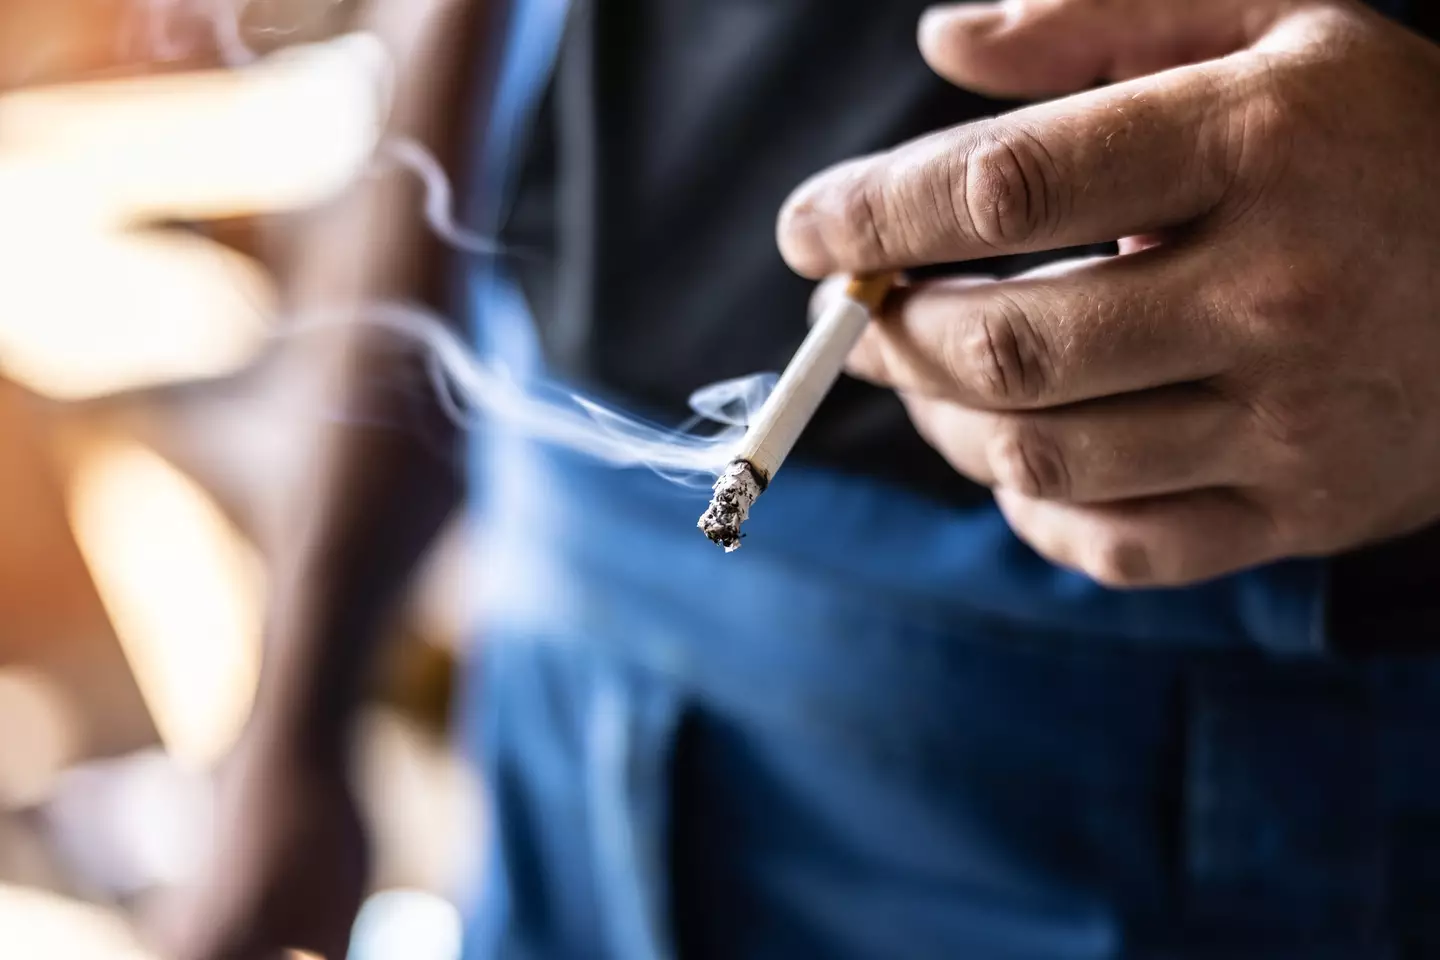 Vaping is still a dangerous alternative to cigarettes. (PATRICK T. FALLON/AFP via Getty Images)